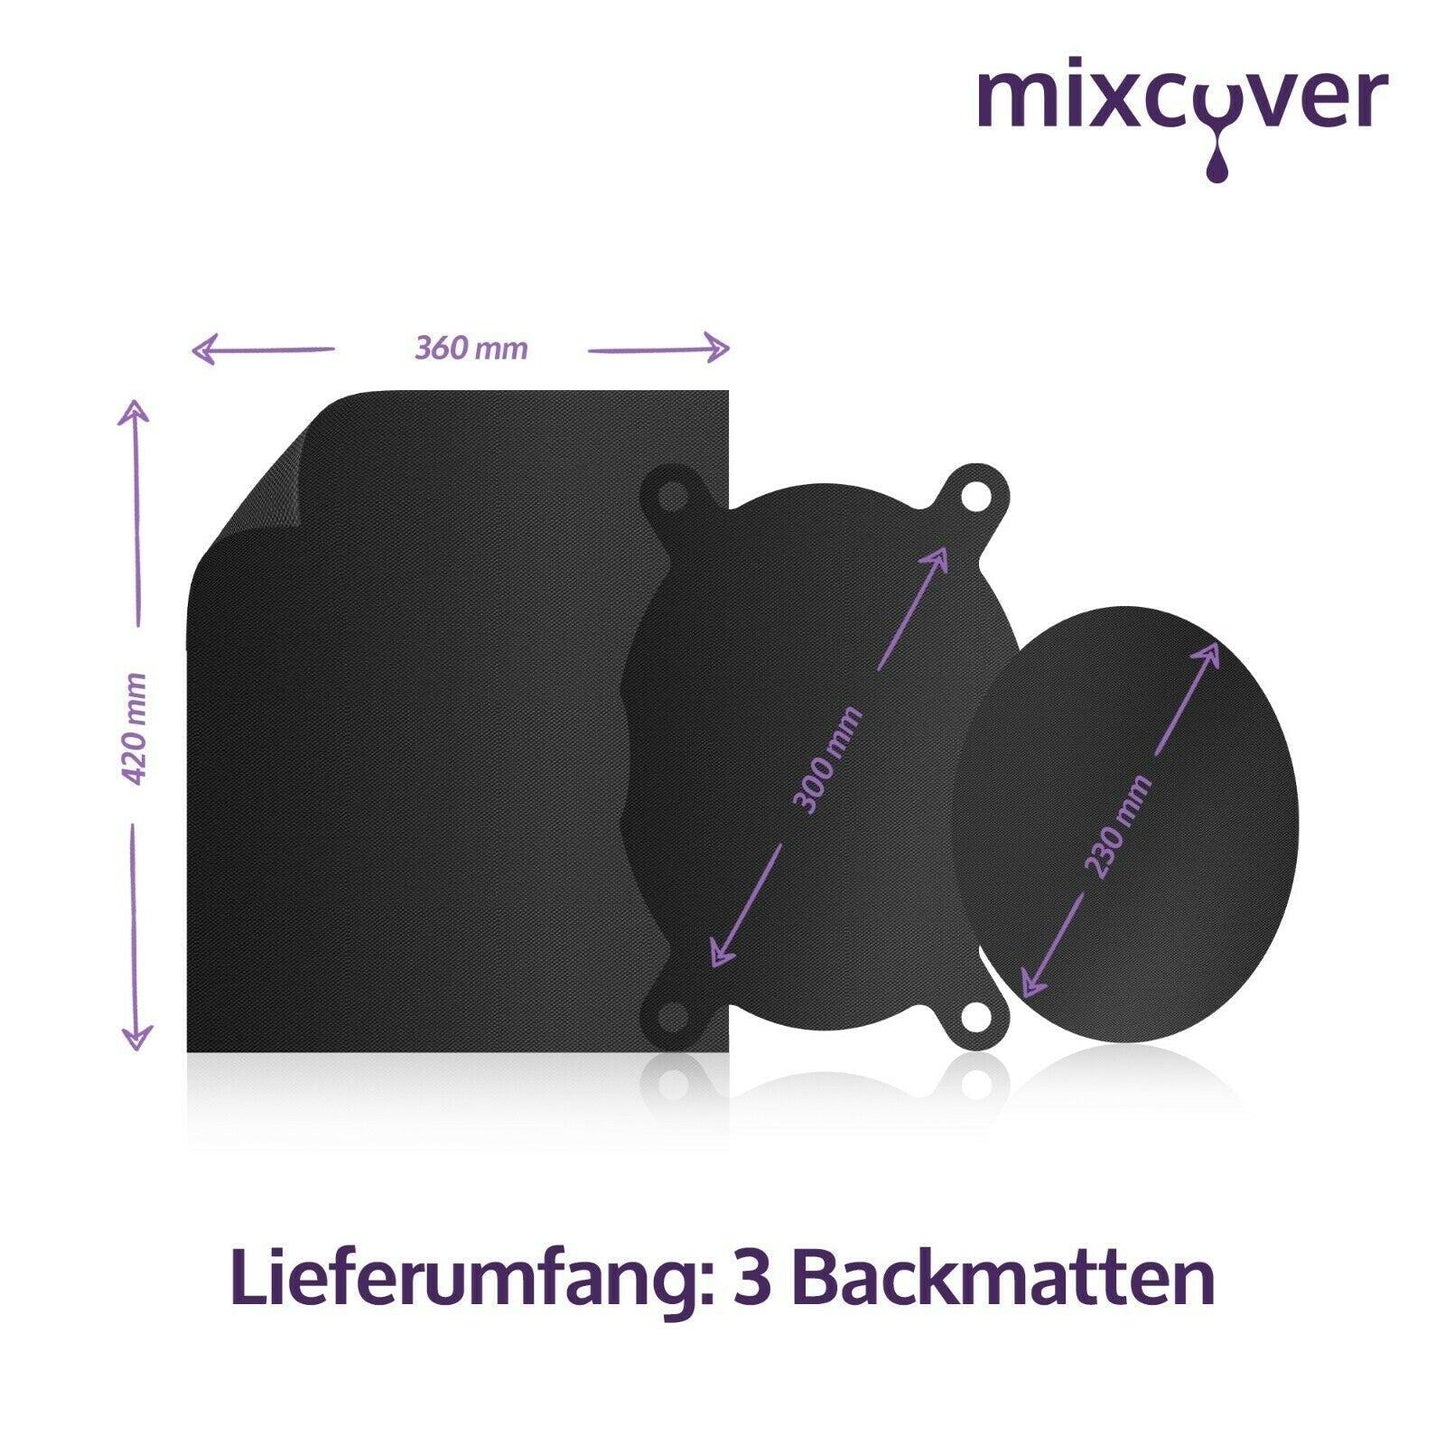 B-Ware: mixcover nachhaltige Backfolie für Thermomix und Backofen - Mixcover - Mixcover